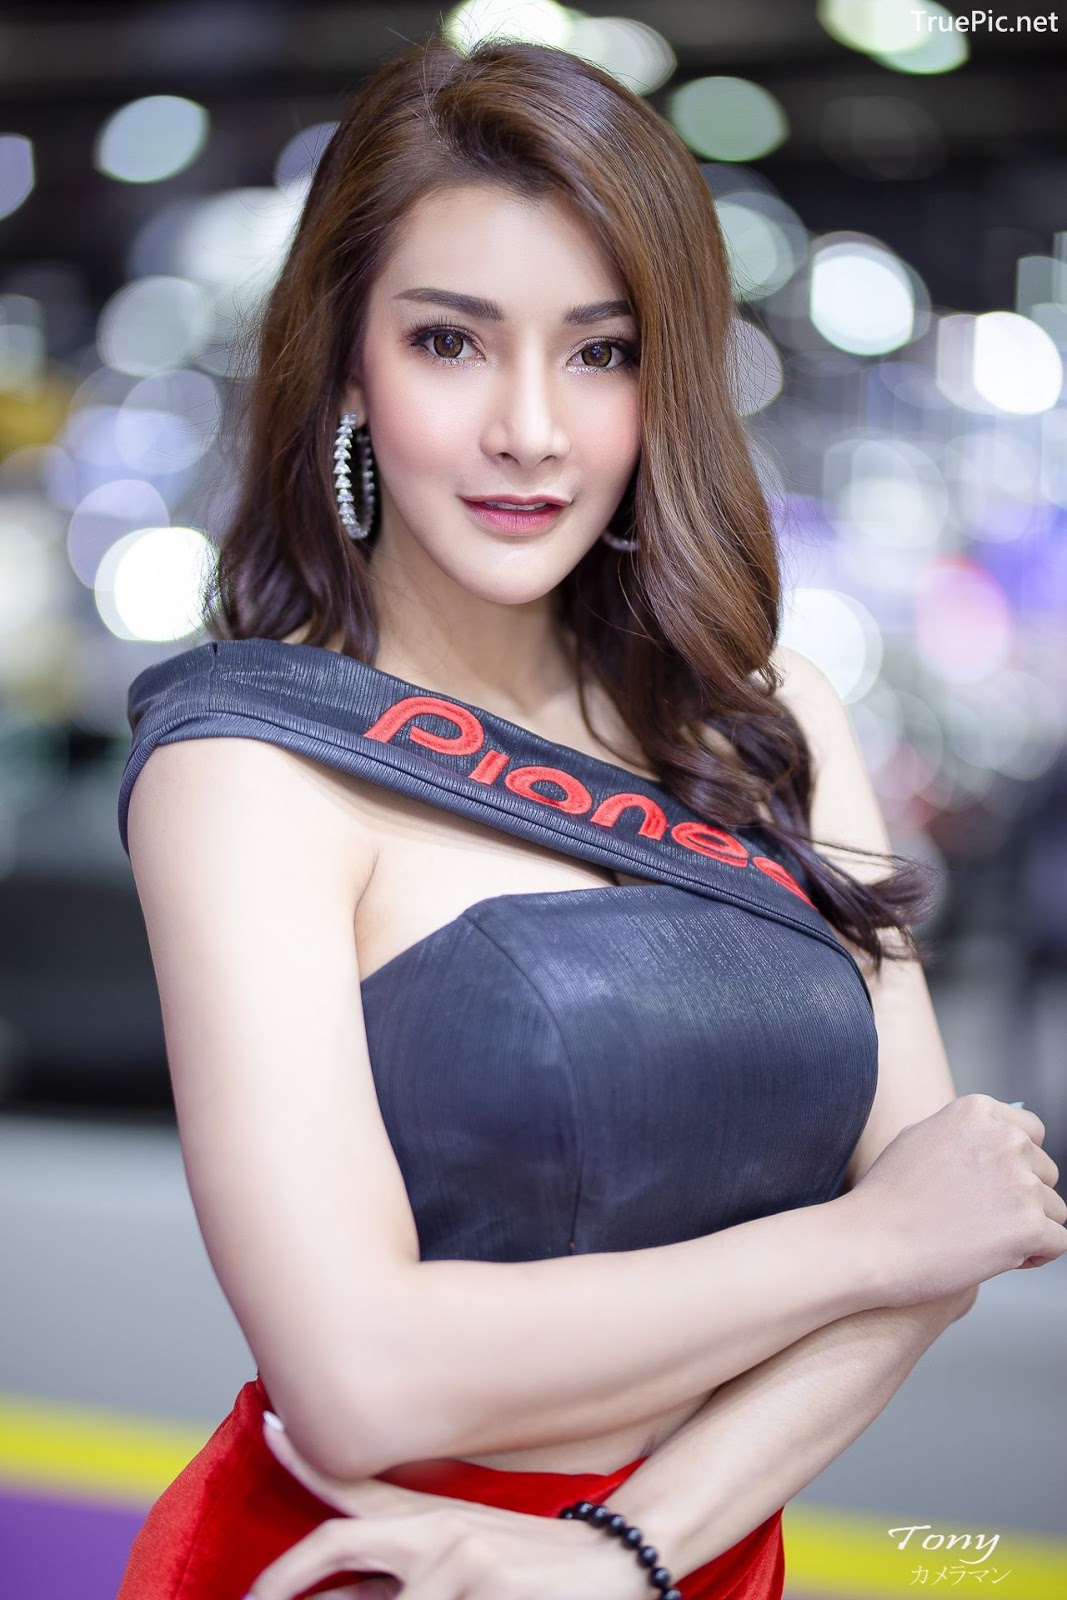 Thailand Hot Model Thai Racing Girl At Motor Expo 2019 Page 13 Of 14 